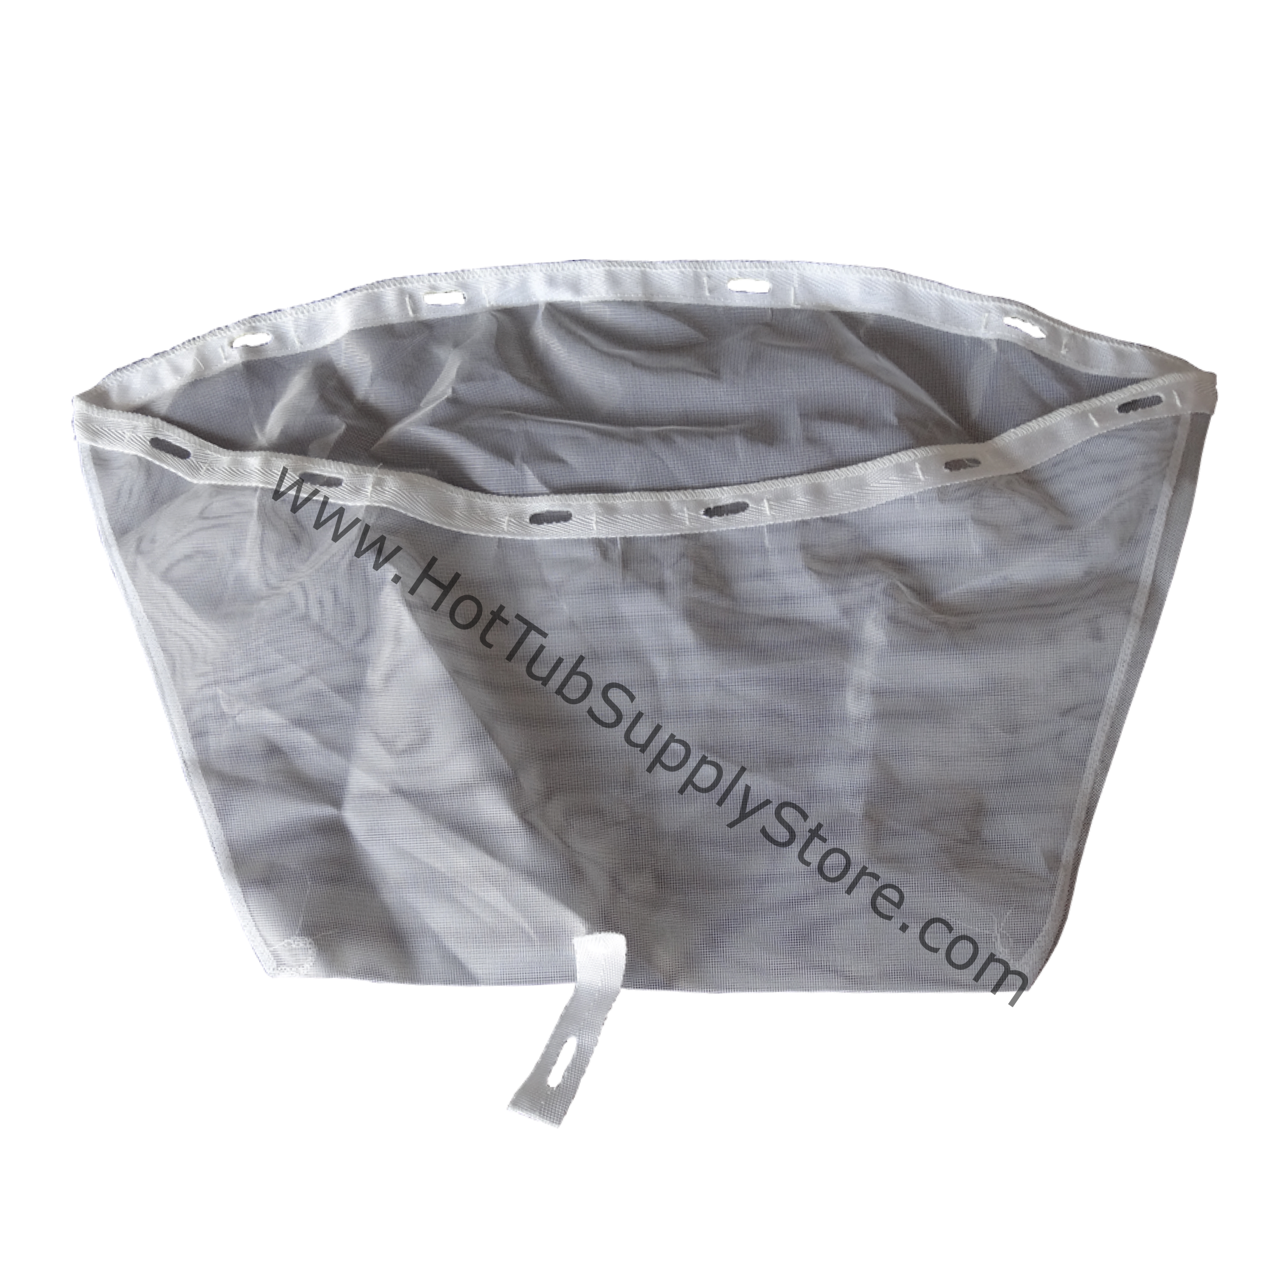 Jacuzzi Spa ProClarity Debris Bag For J-400 Series Spas 2012 6570-398 